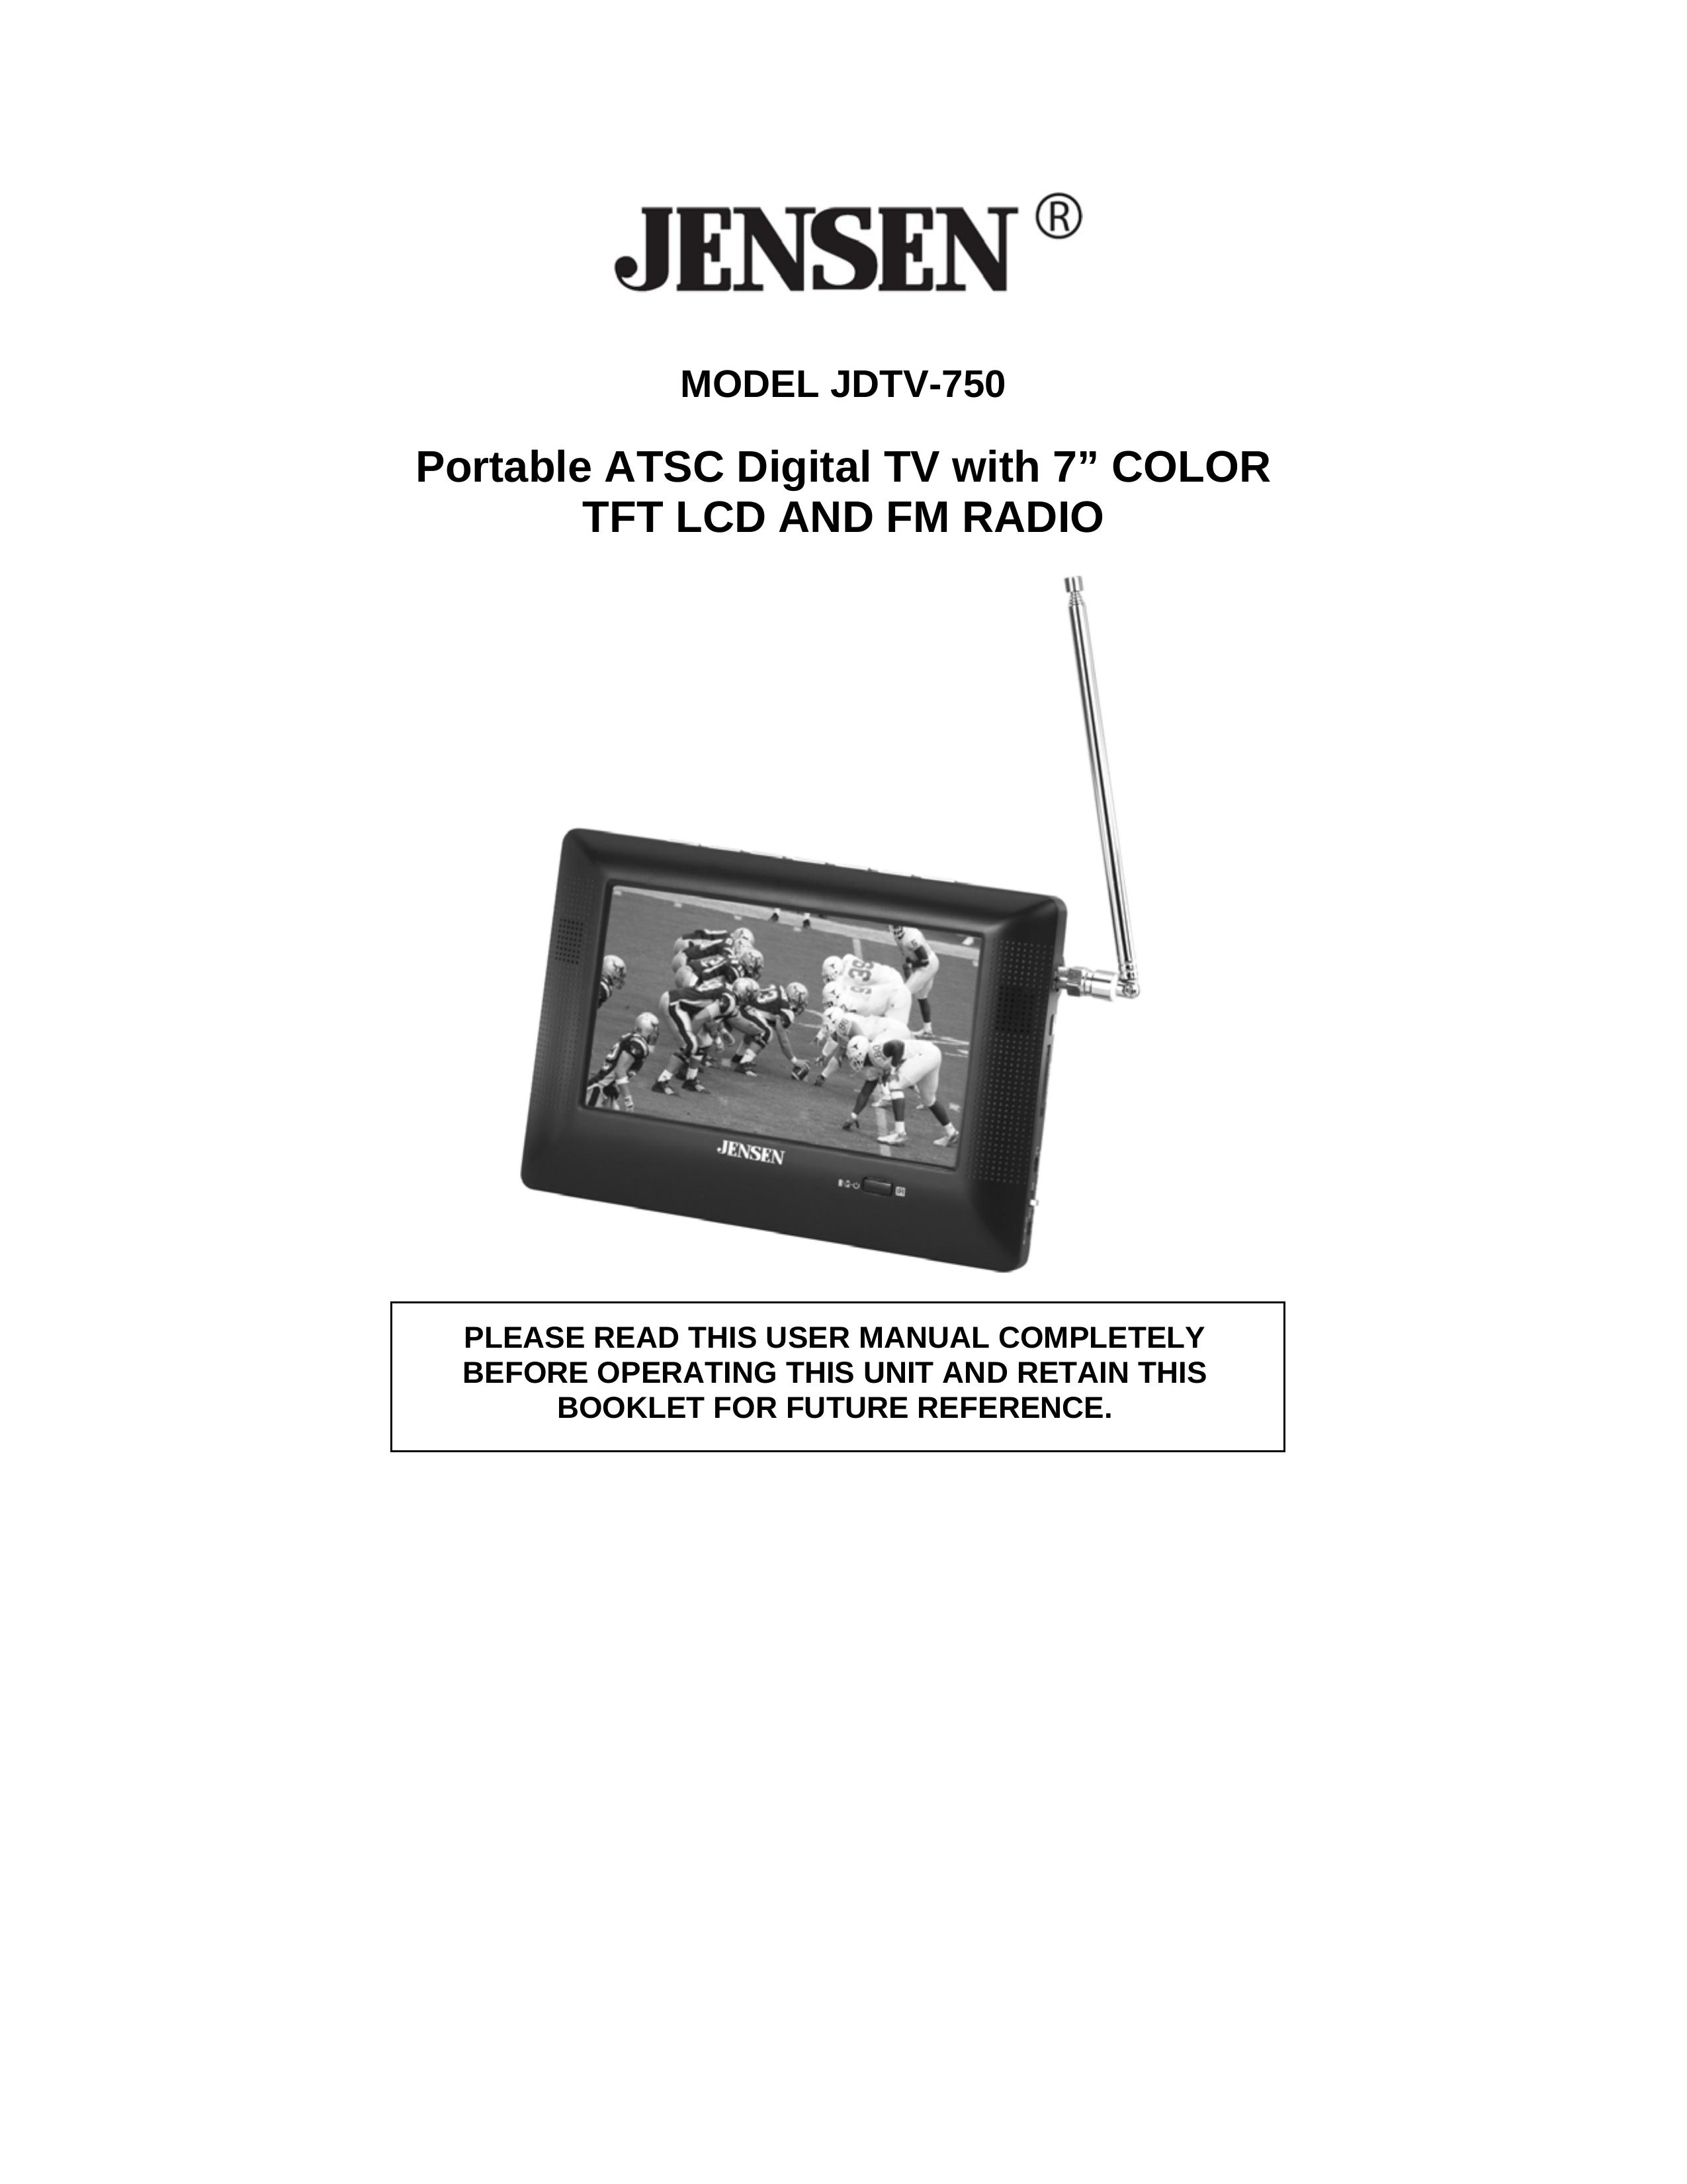 Jensen JDTV-750 Handheld TV User Manual